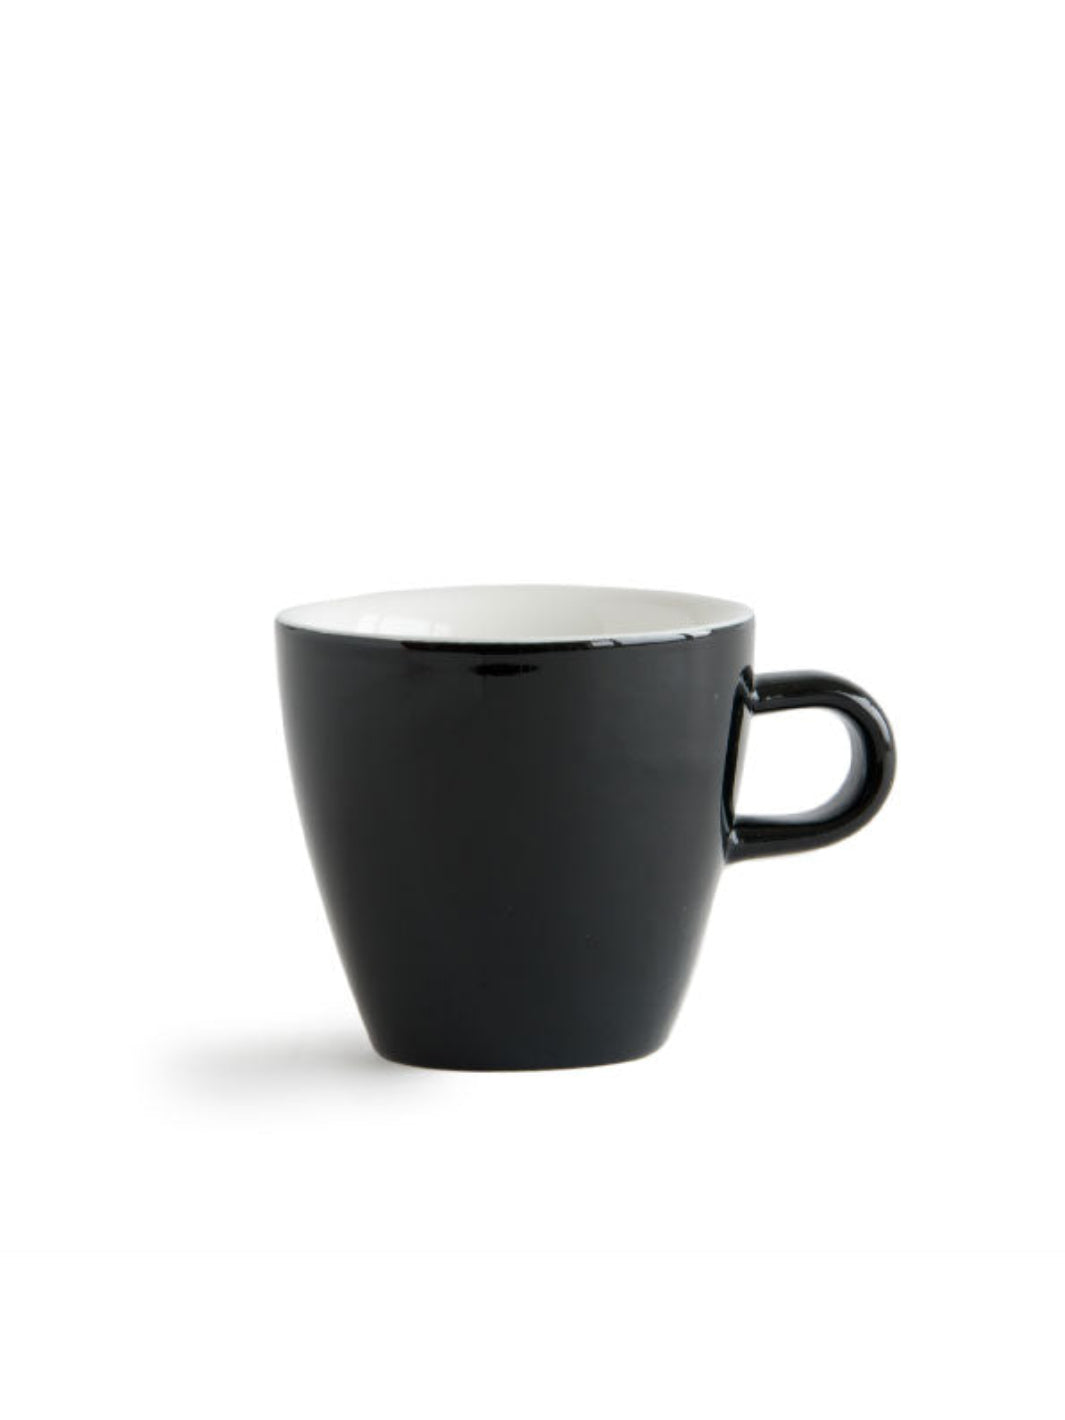 ACME Espresso Tulip Cup (170ml/5.75oz)